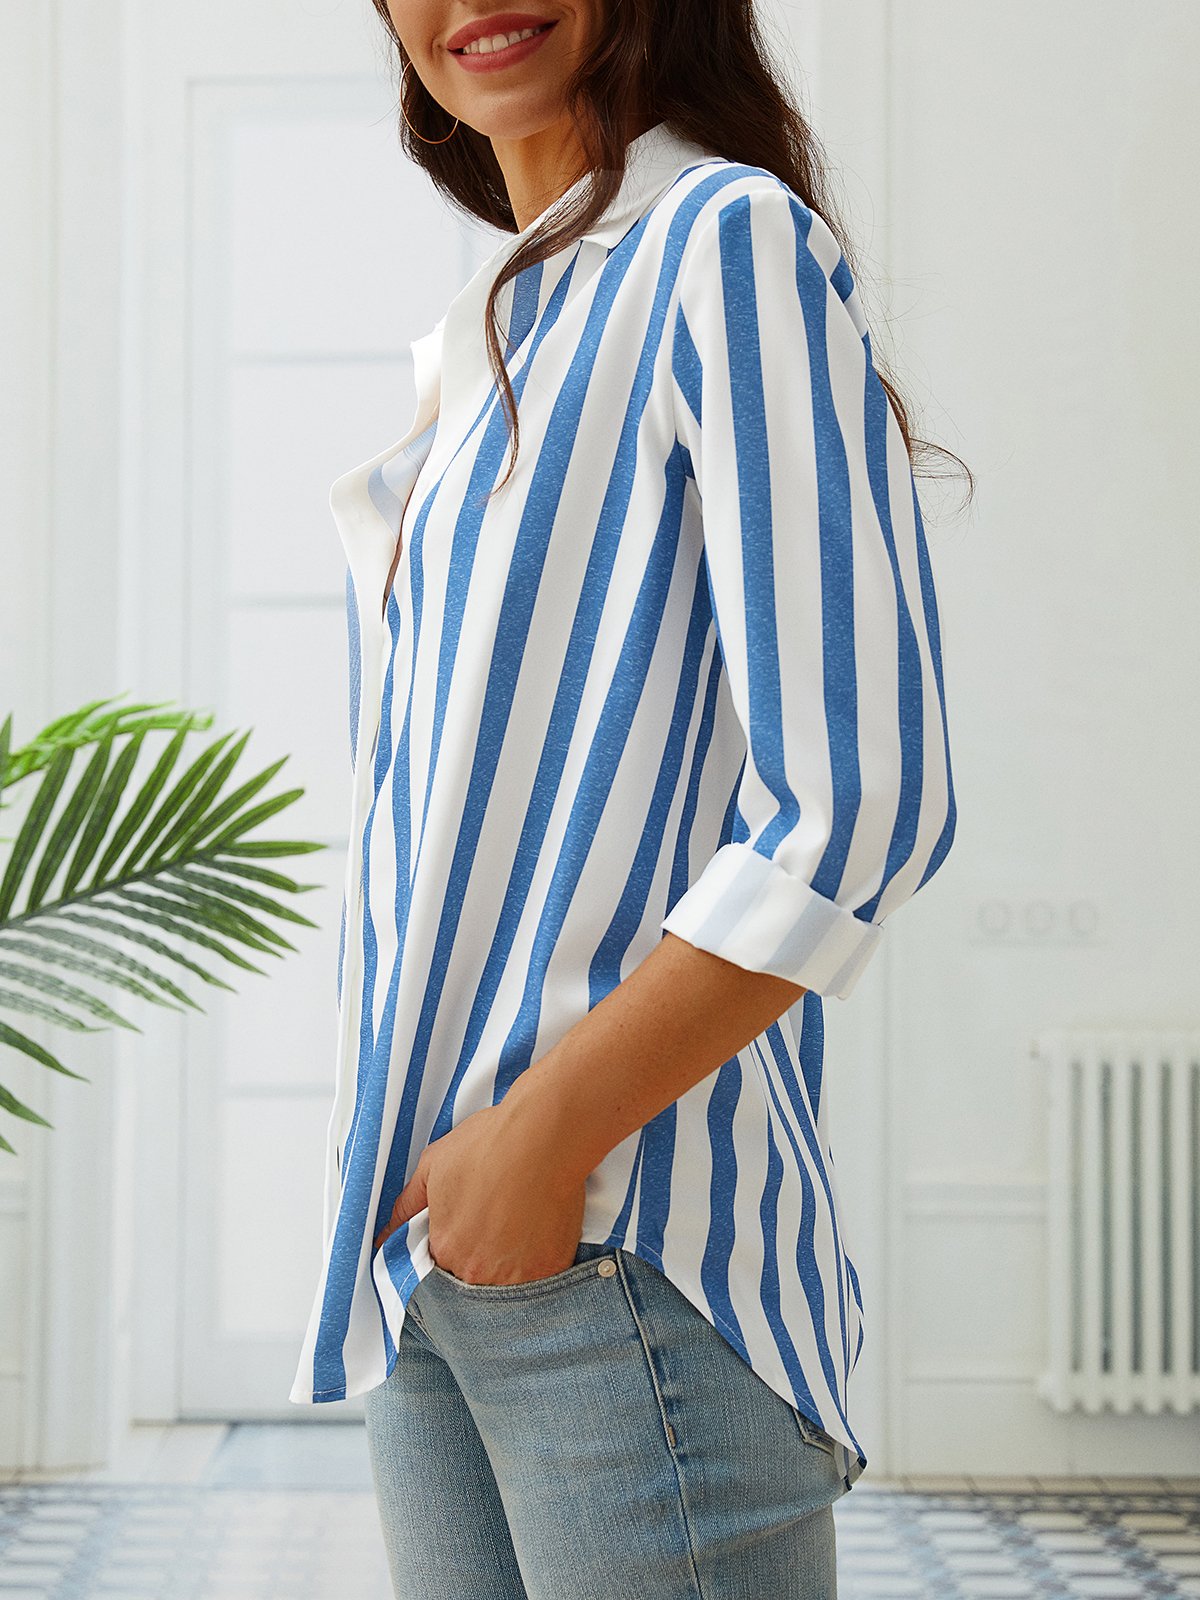 JFN women's Stripes Long Sleeve casual loose shirts	